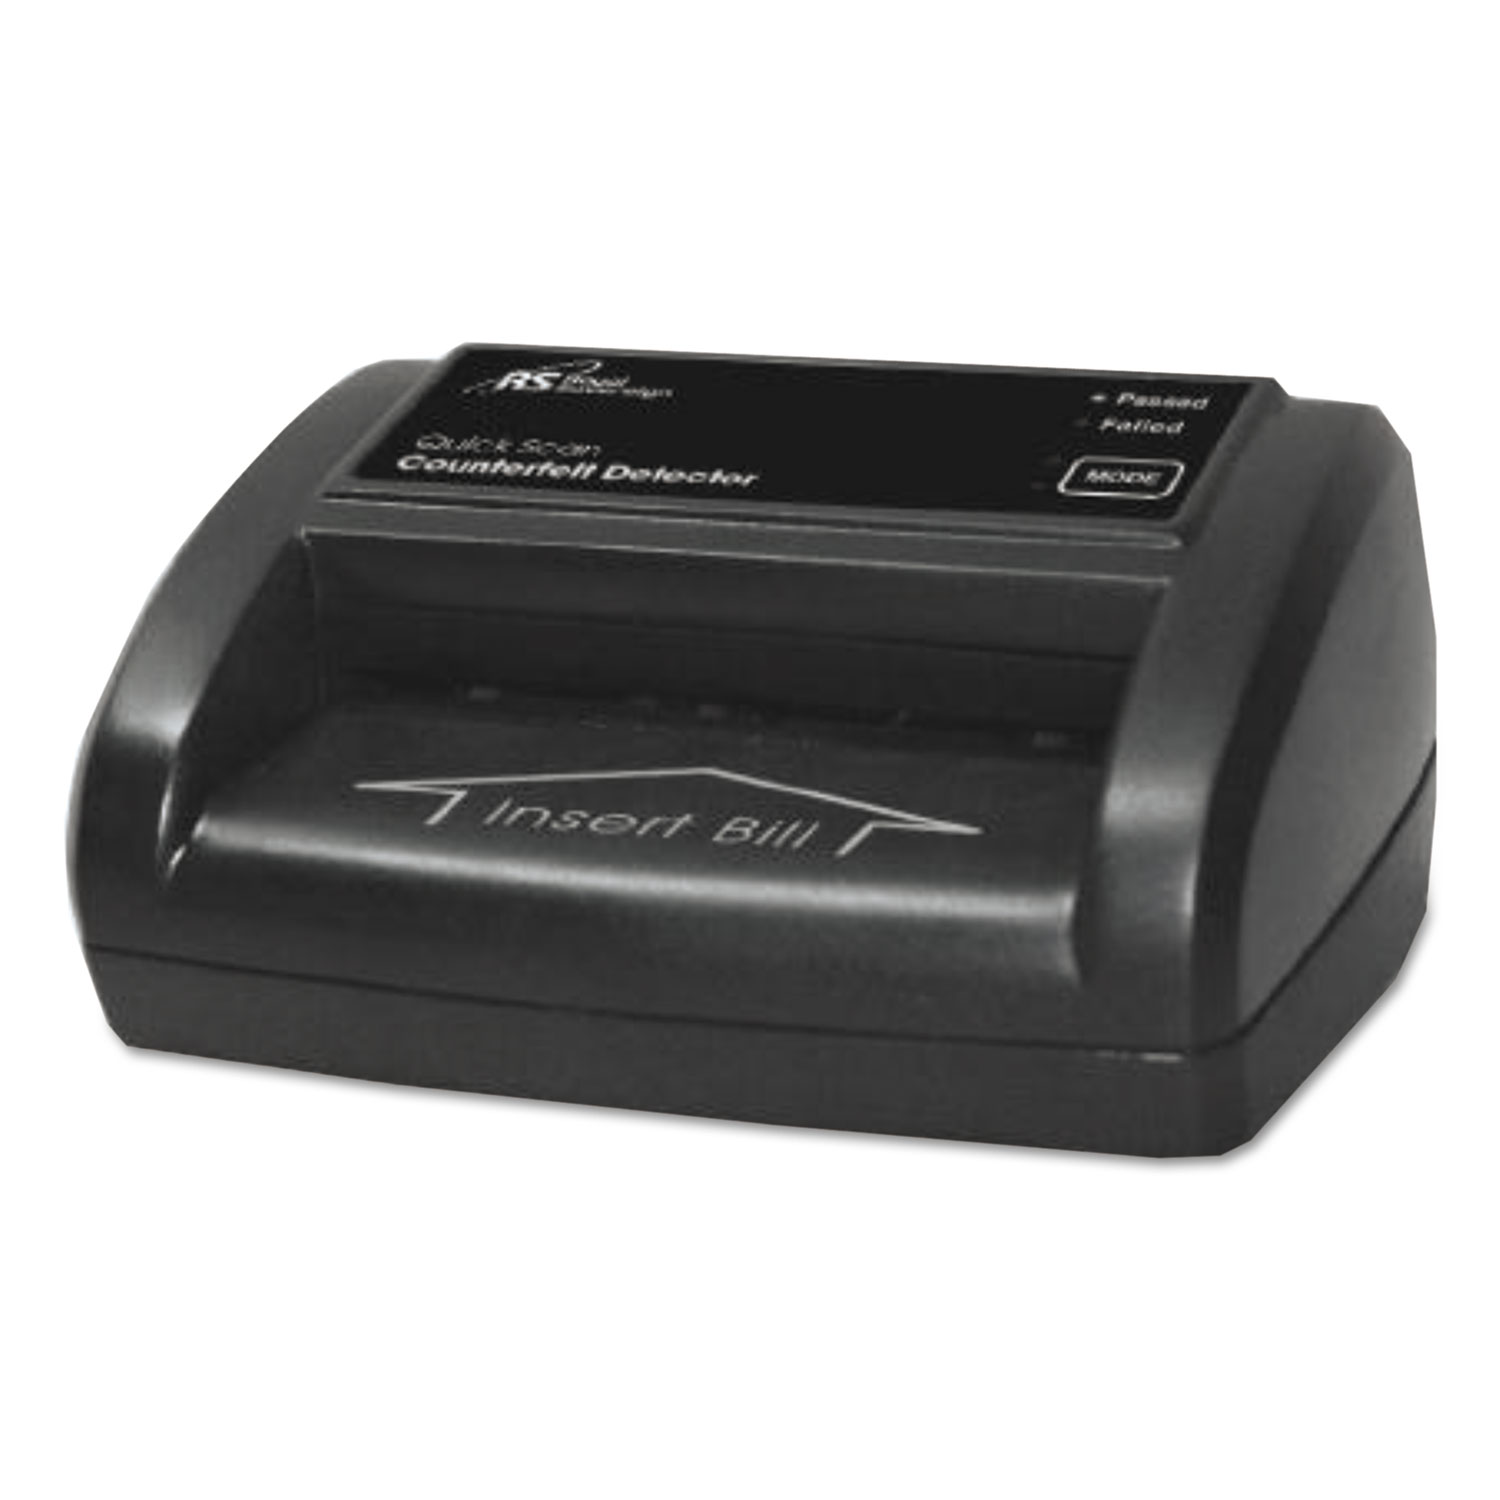 Portable Four-Way Counterfeit Detector, 5 x 3 1/2 x 2 3/8, Black